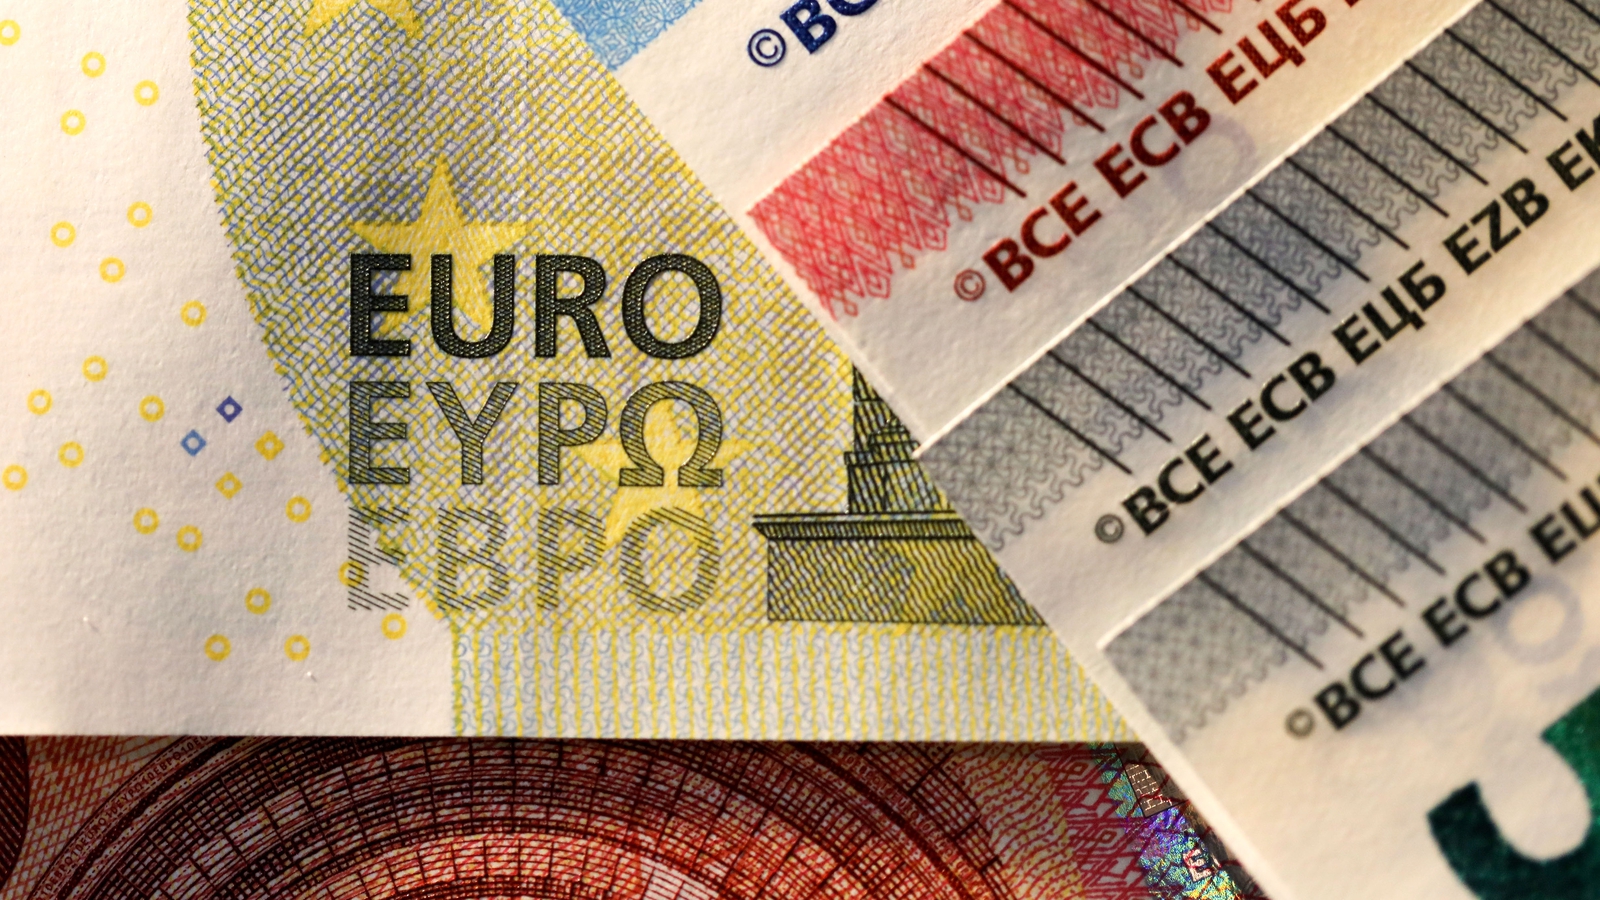 Euro zone likely heading into mild recession - PMI